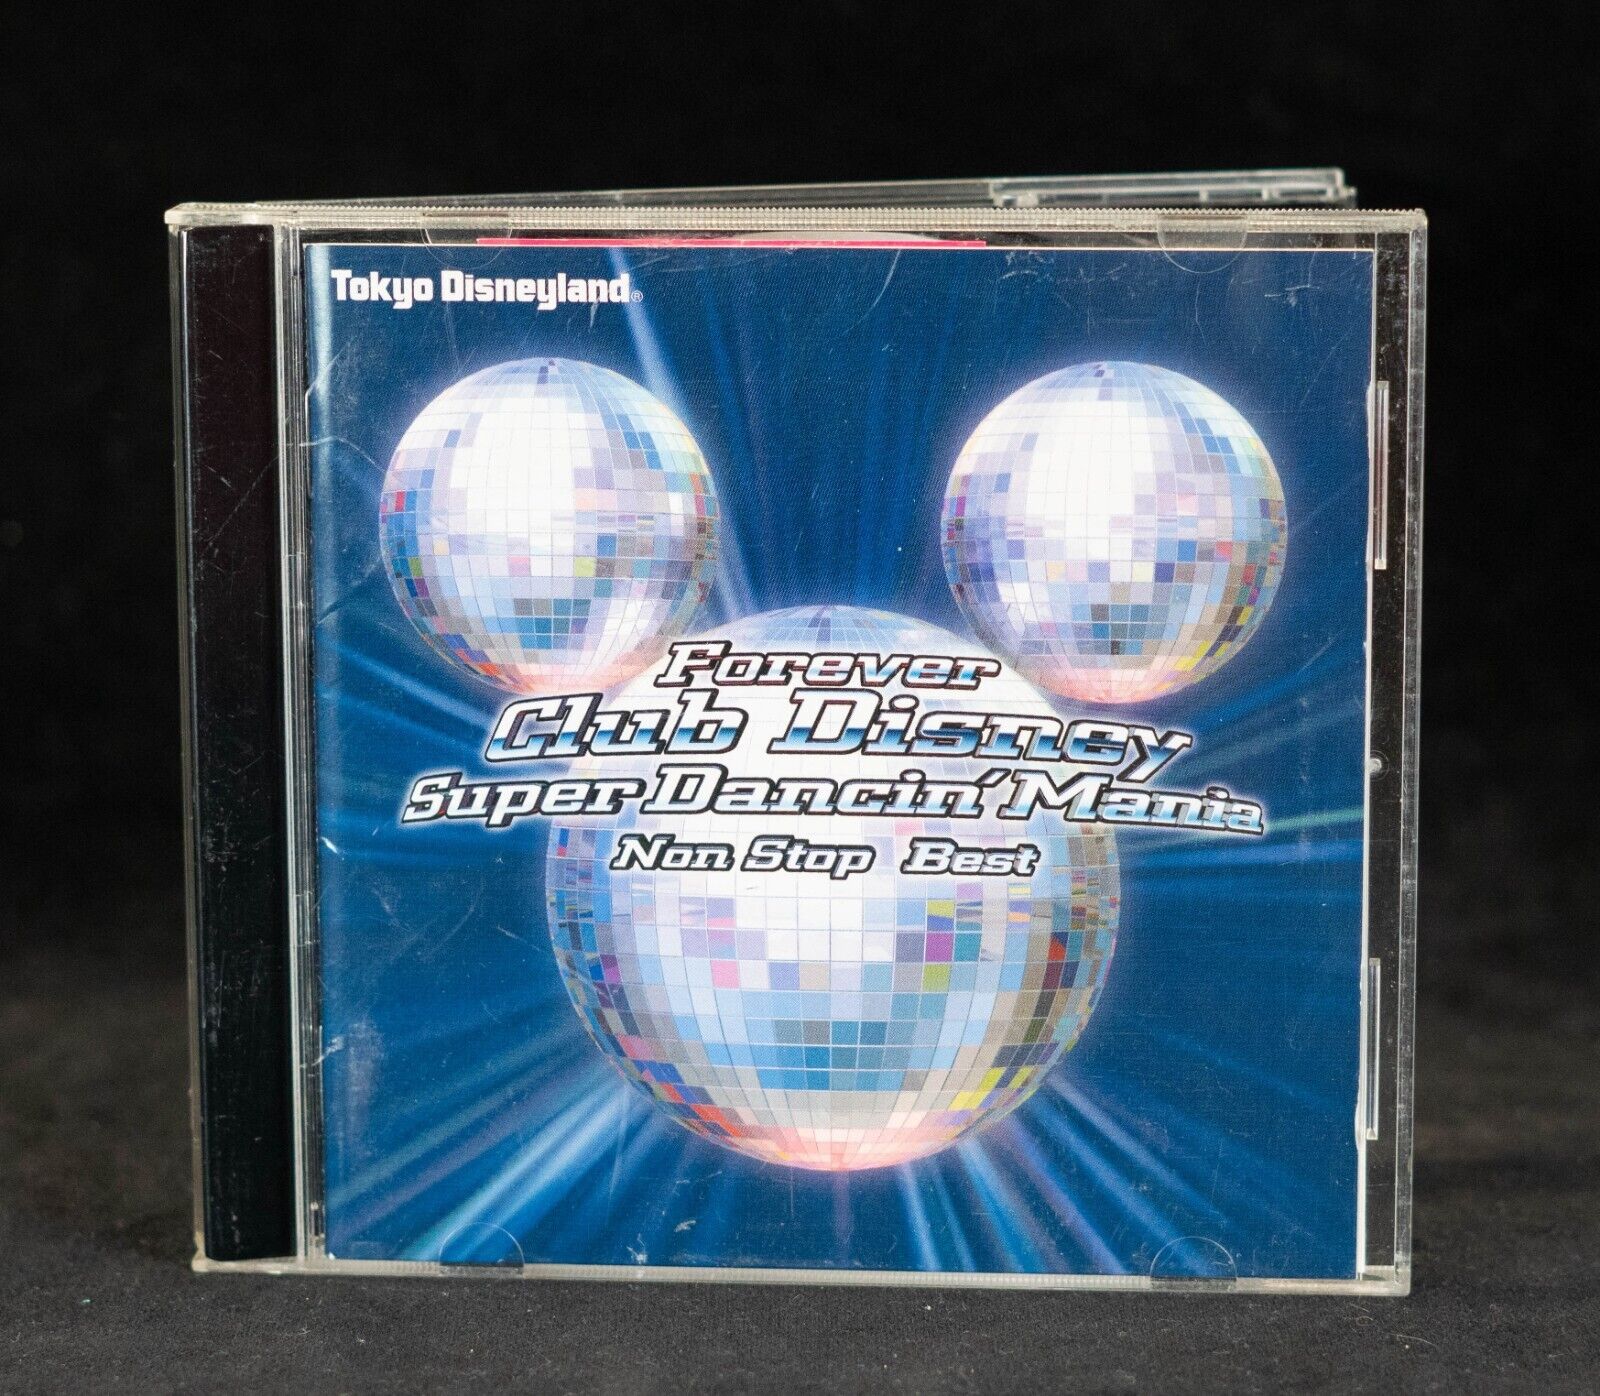 Forever Club Disney Super Dancin\'Mania Non Stop Best (2000, Walt Disney) CD